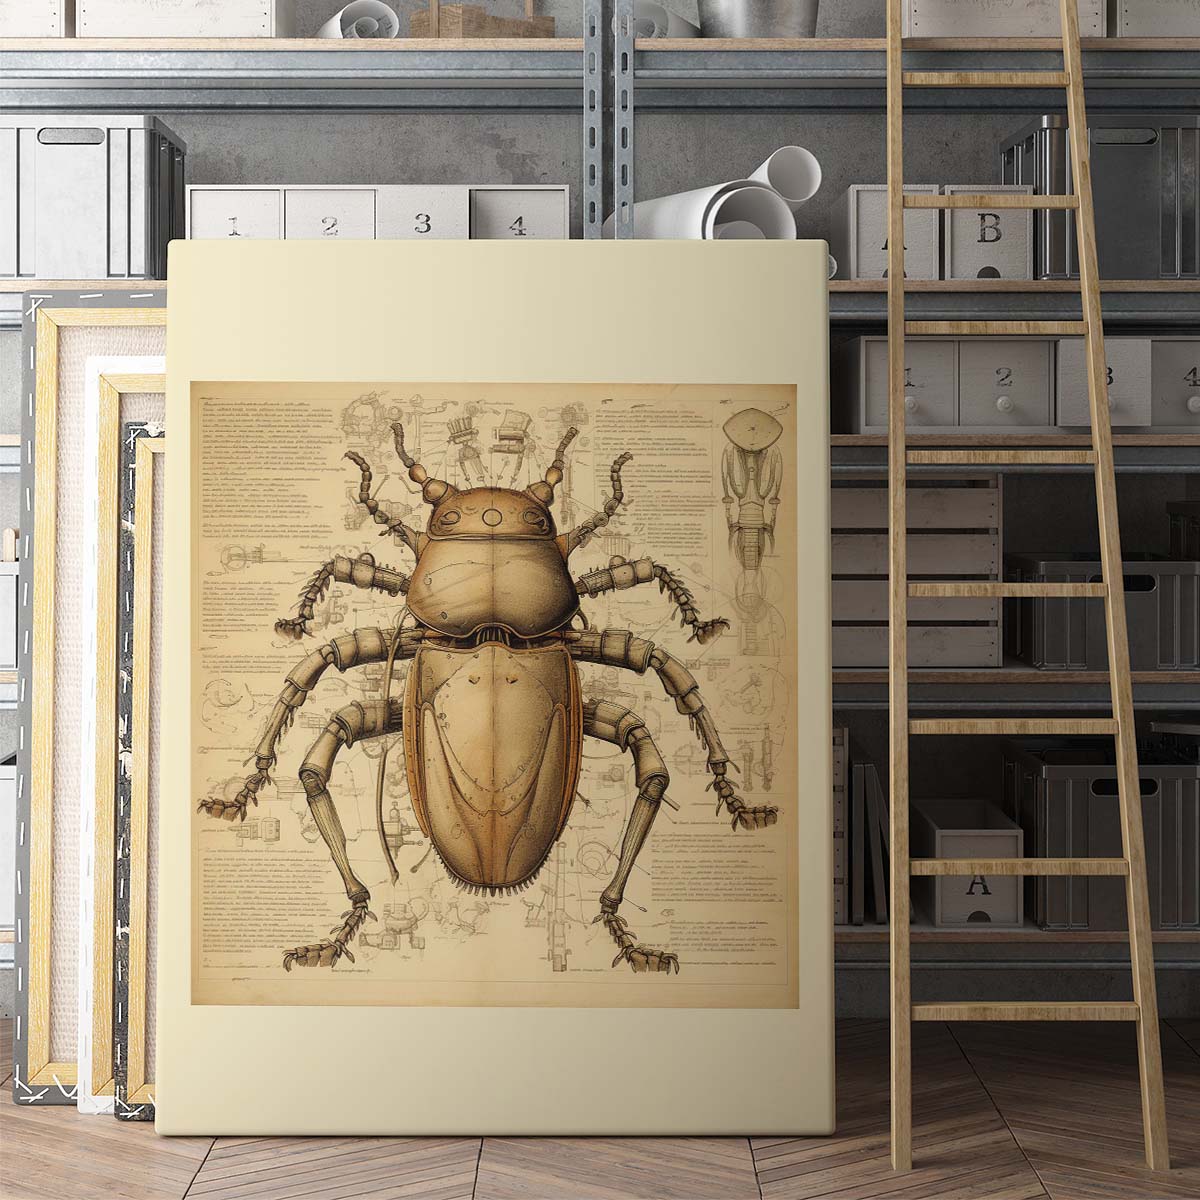 Drawings Beetle 02 Da Vinci Style Vintage Framed Canvas Prints Wall Art Hanging Home Decor